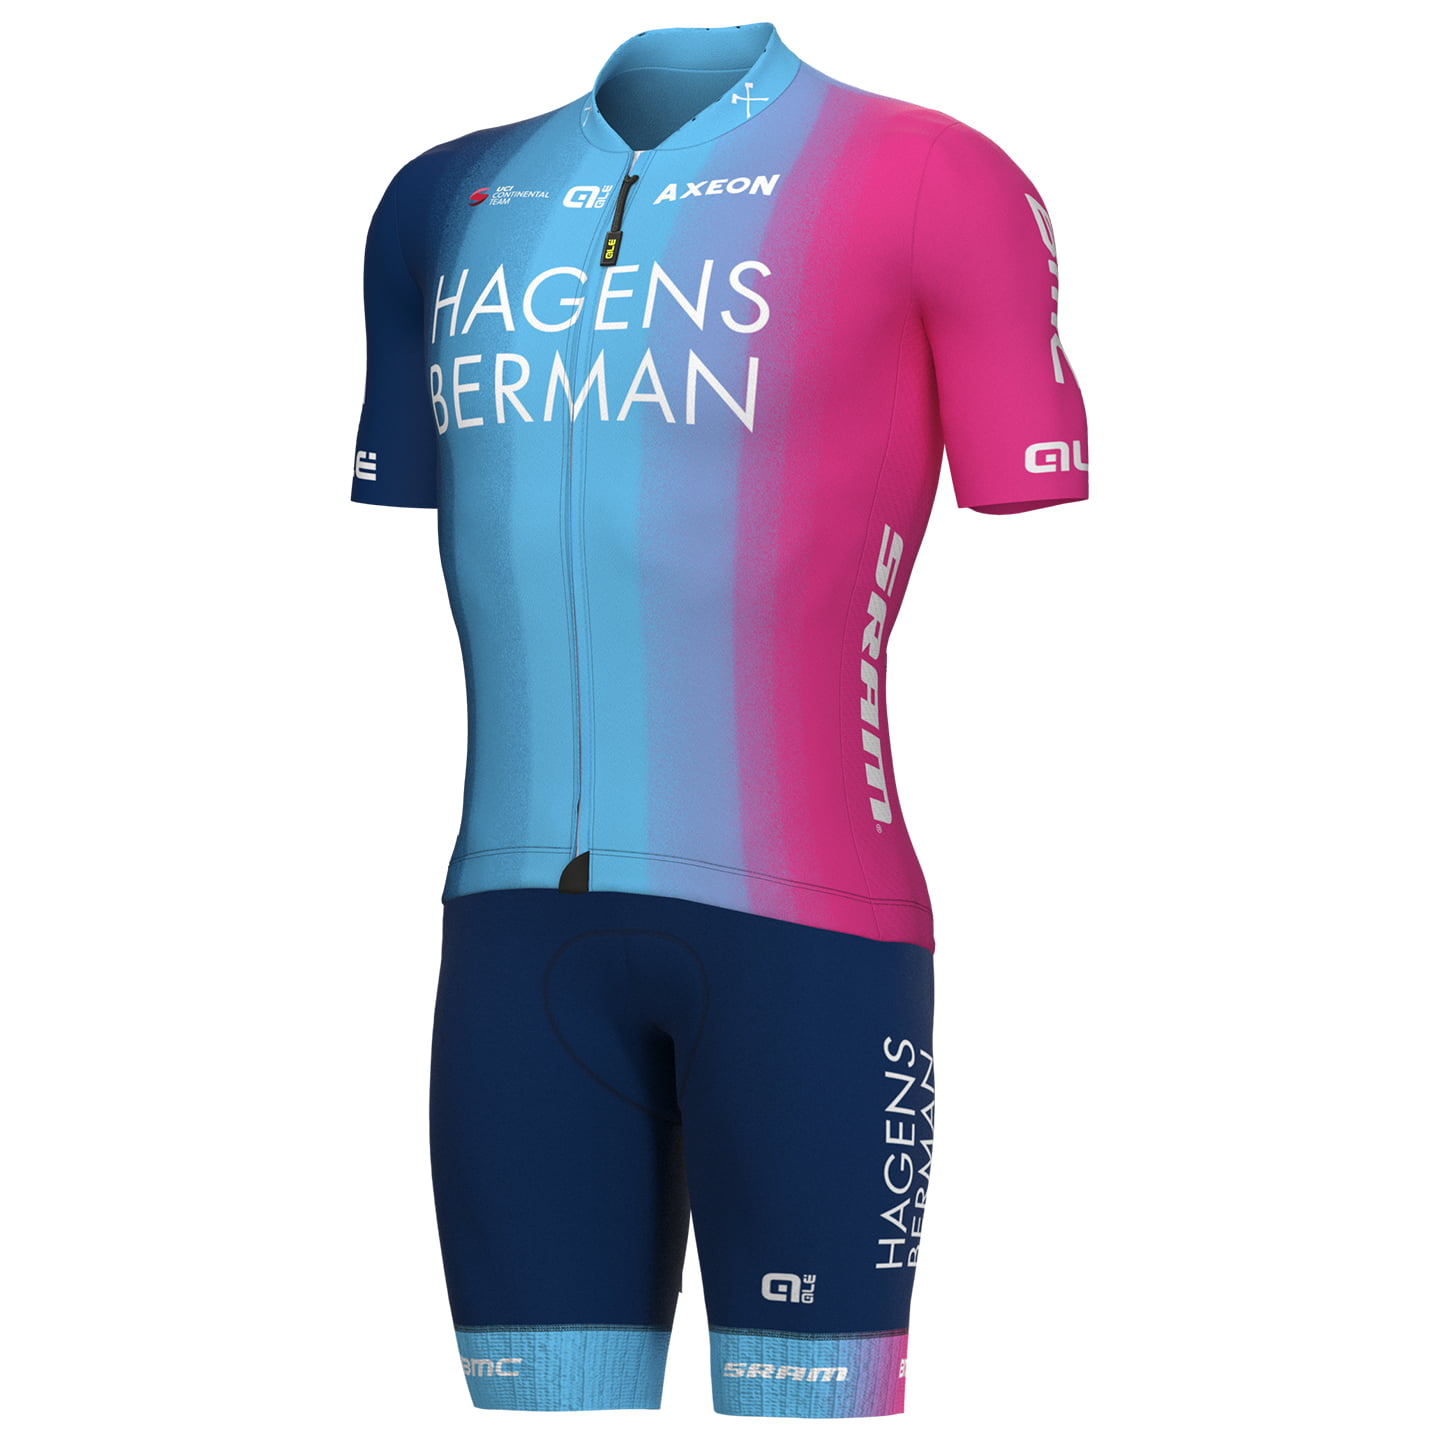 HAGENS BERMAN AXEON 2022 Set (cycling jersey + cycling shorts) Set (2 pieces), for men, Cycling clothing